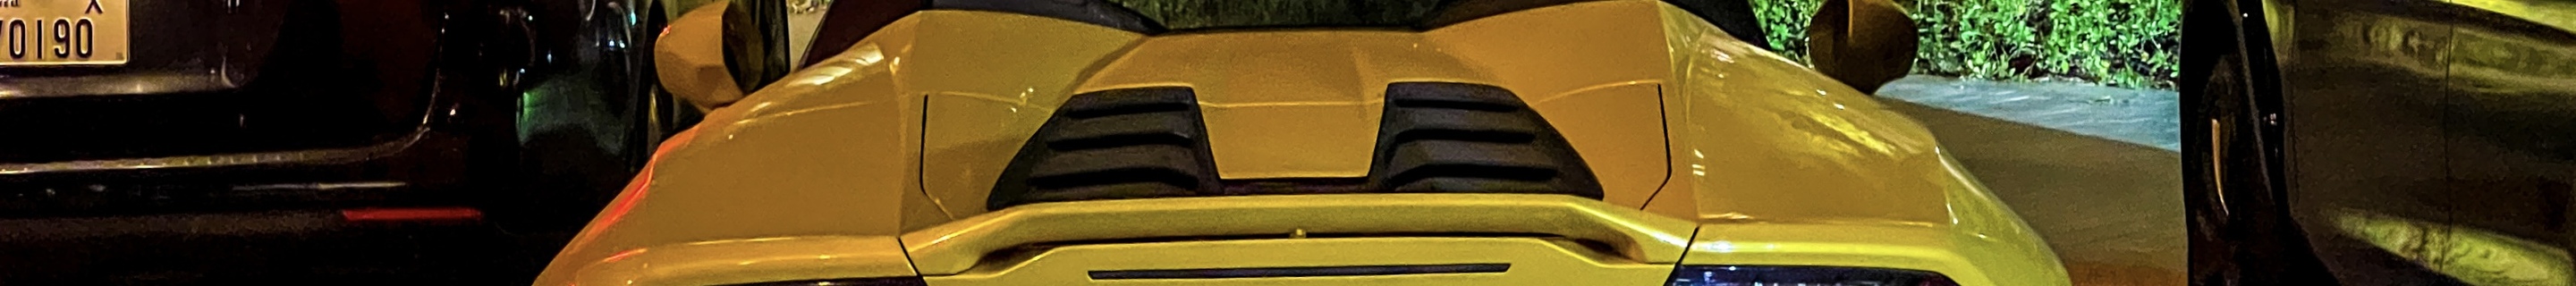 Lamborghini Huracán LP640-4 EVO Spyder